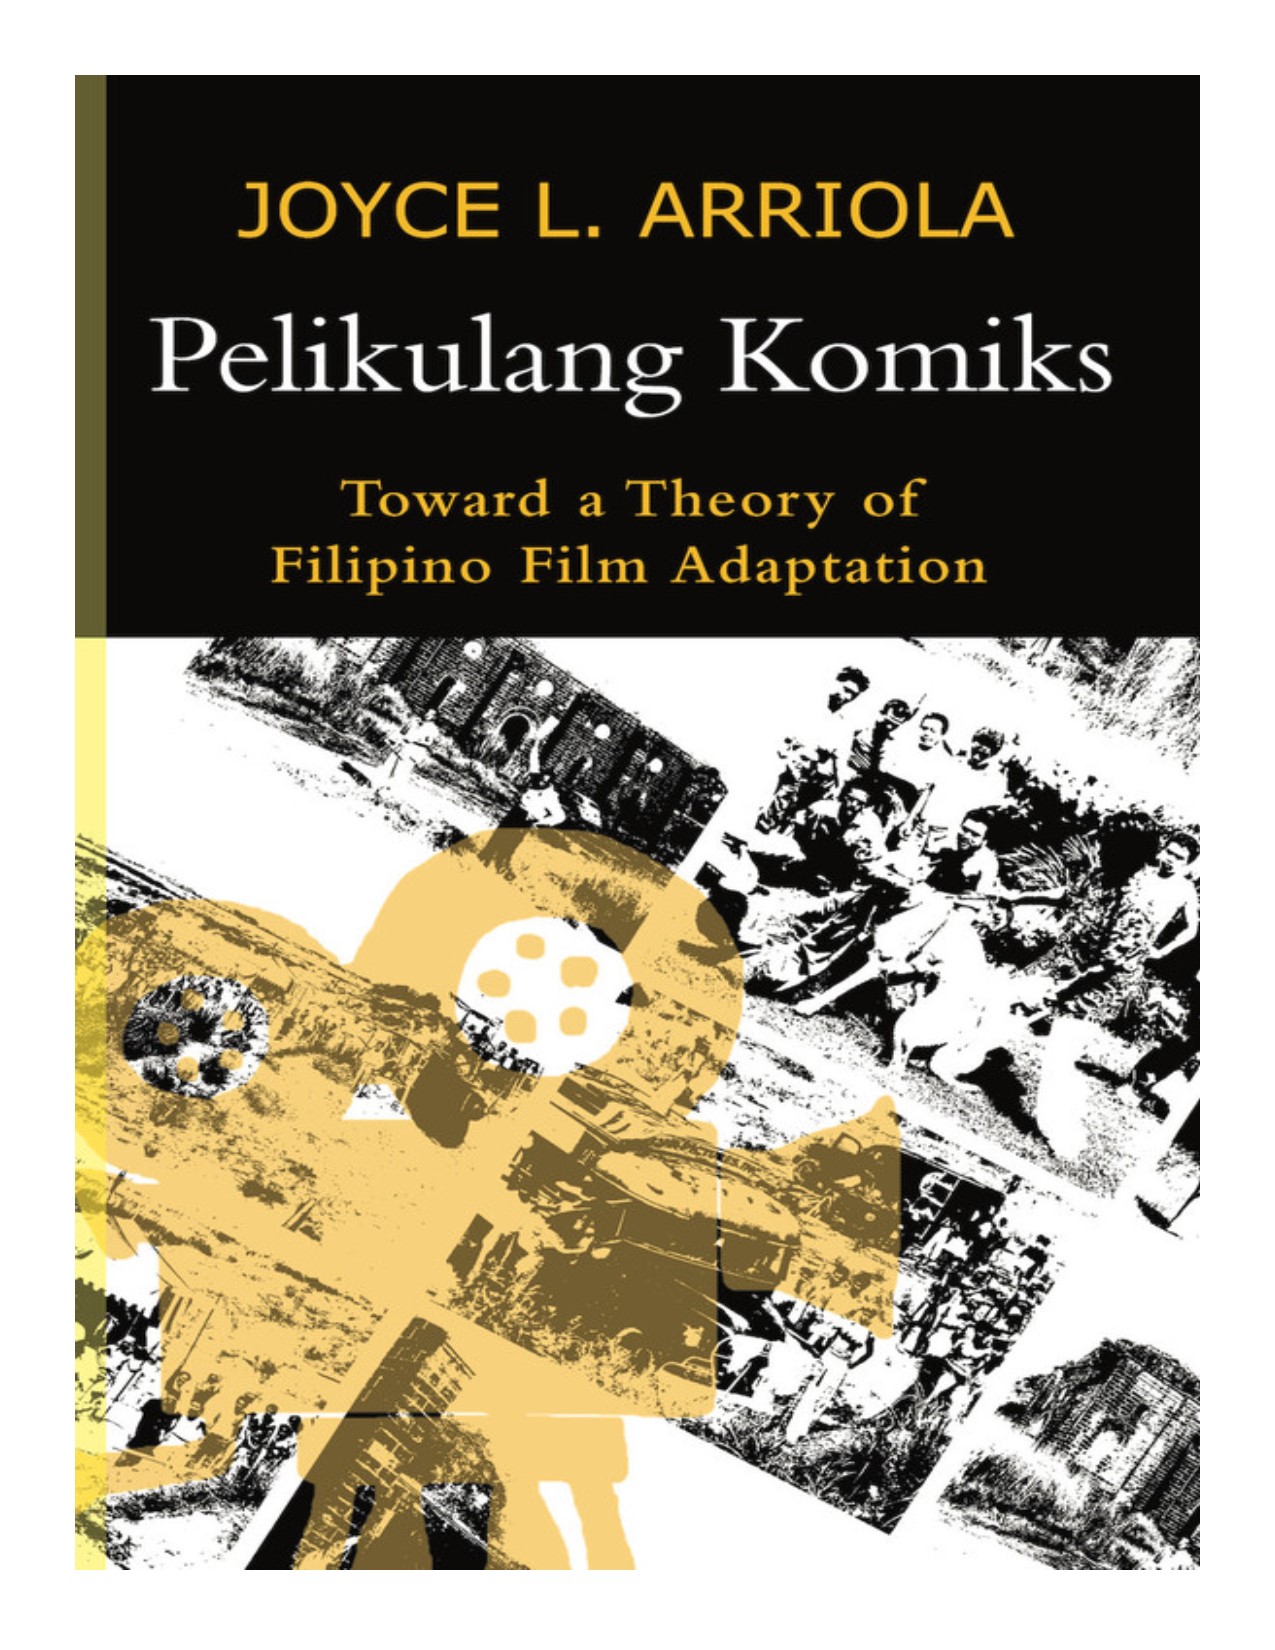 Pelikulang komiks towards a theory of Filipino film adaptation